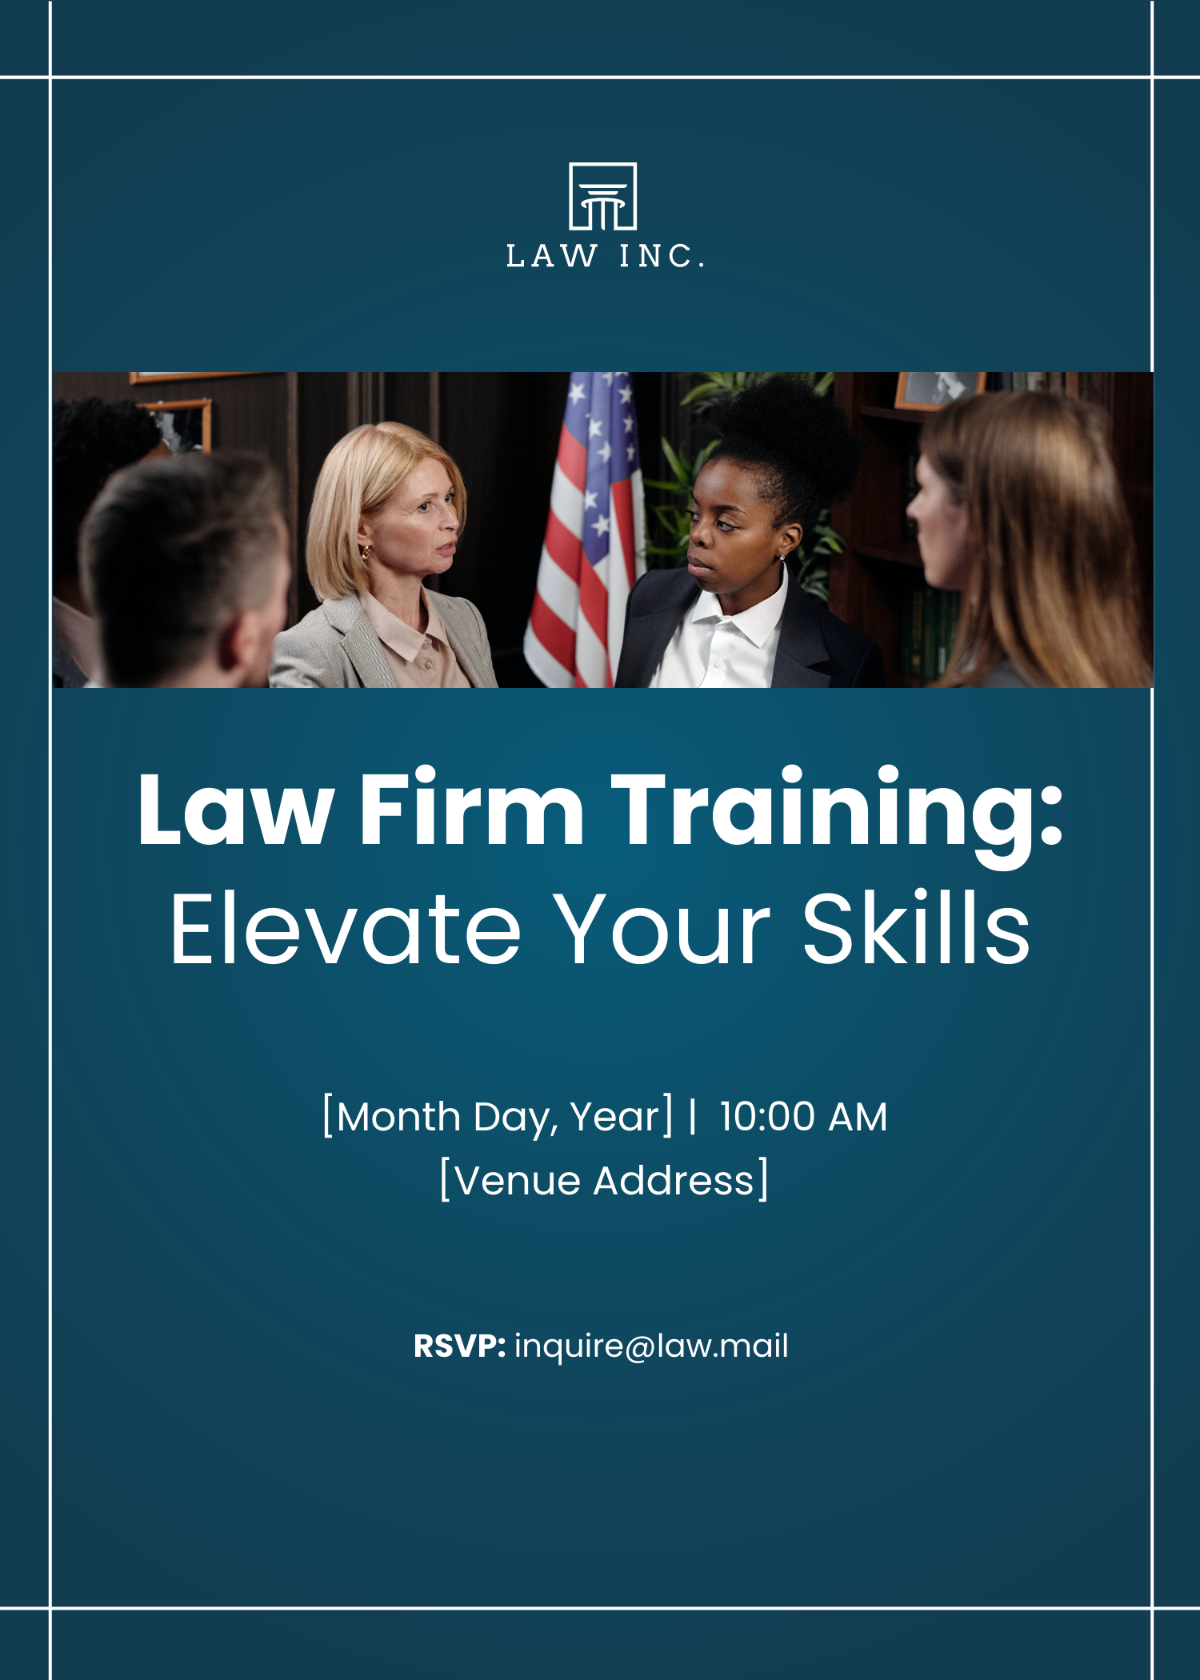 Law Firm Training Invitation